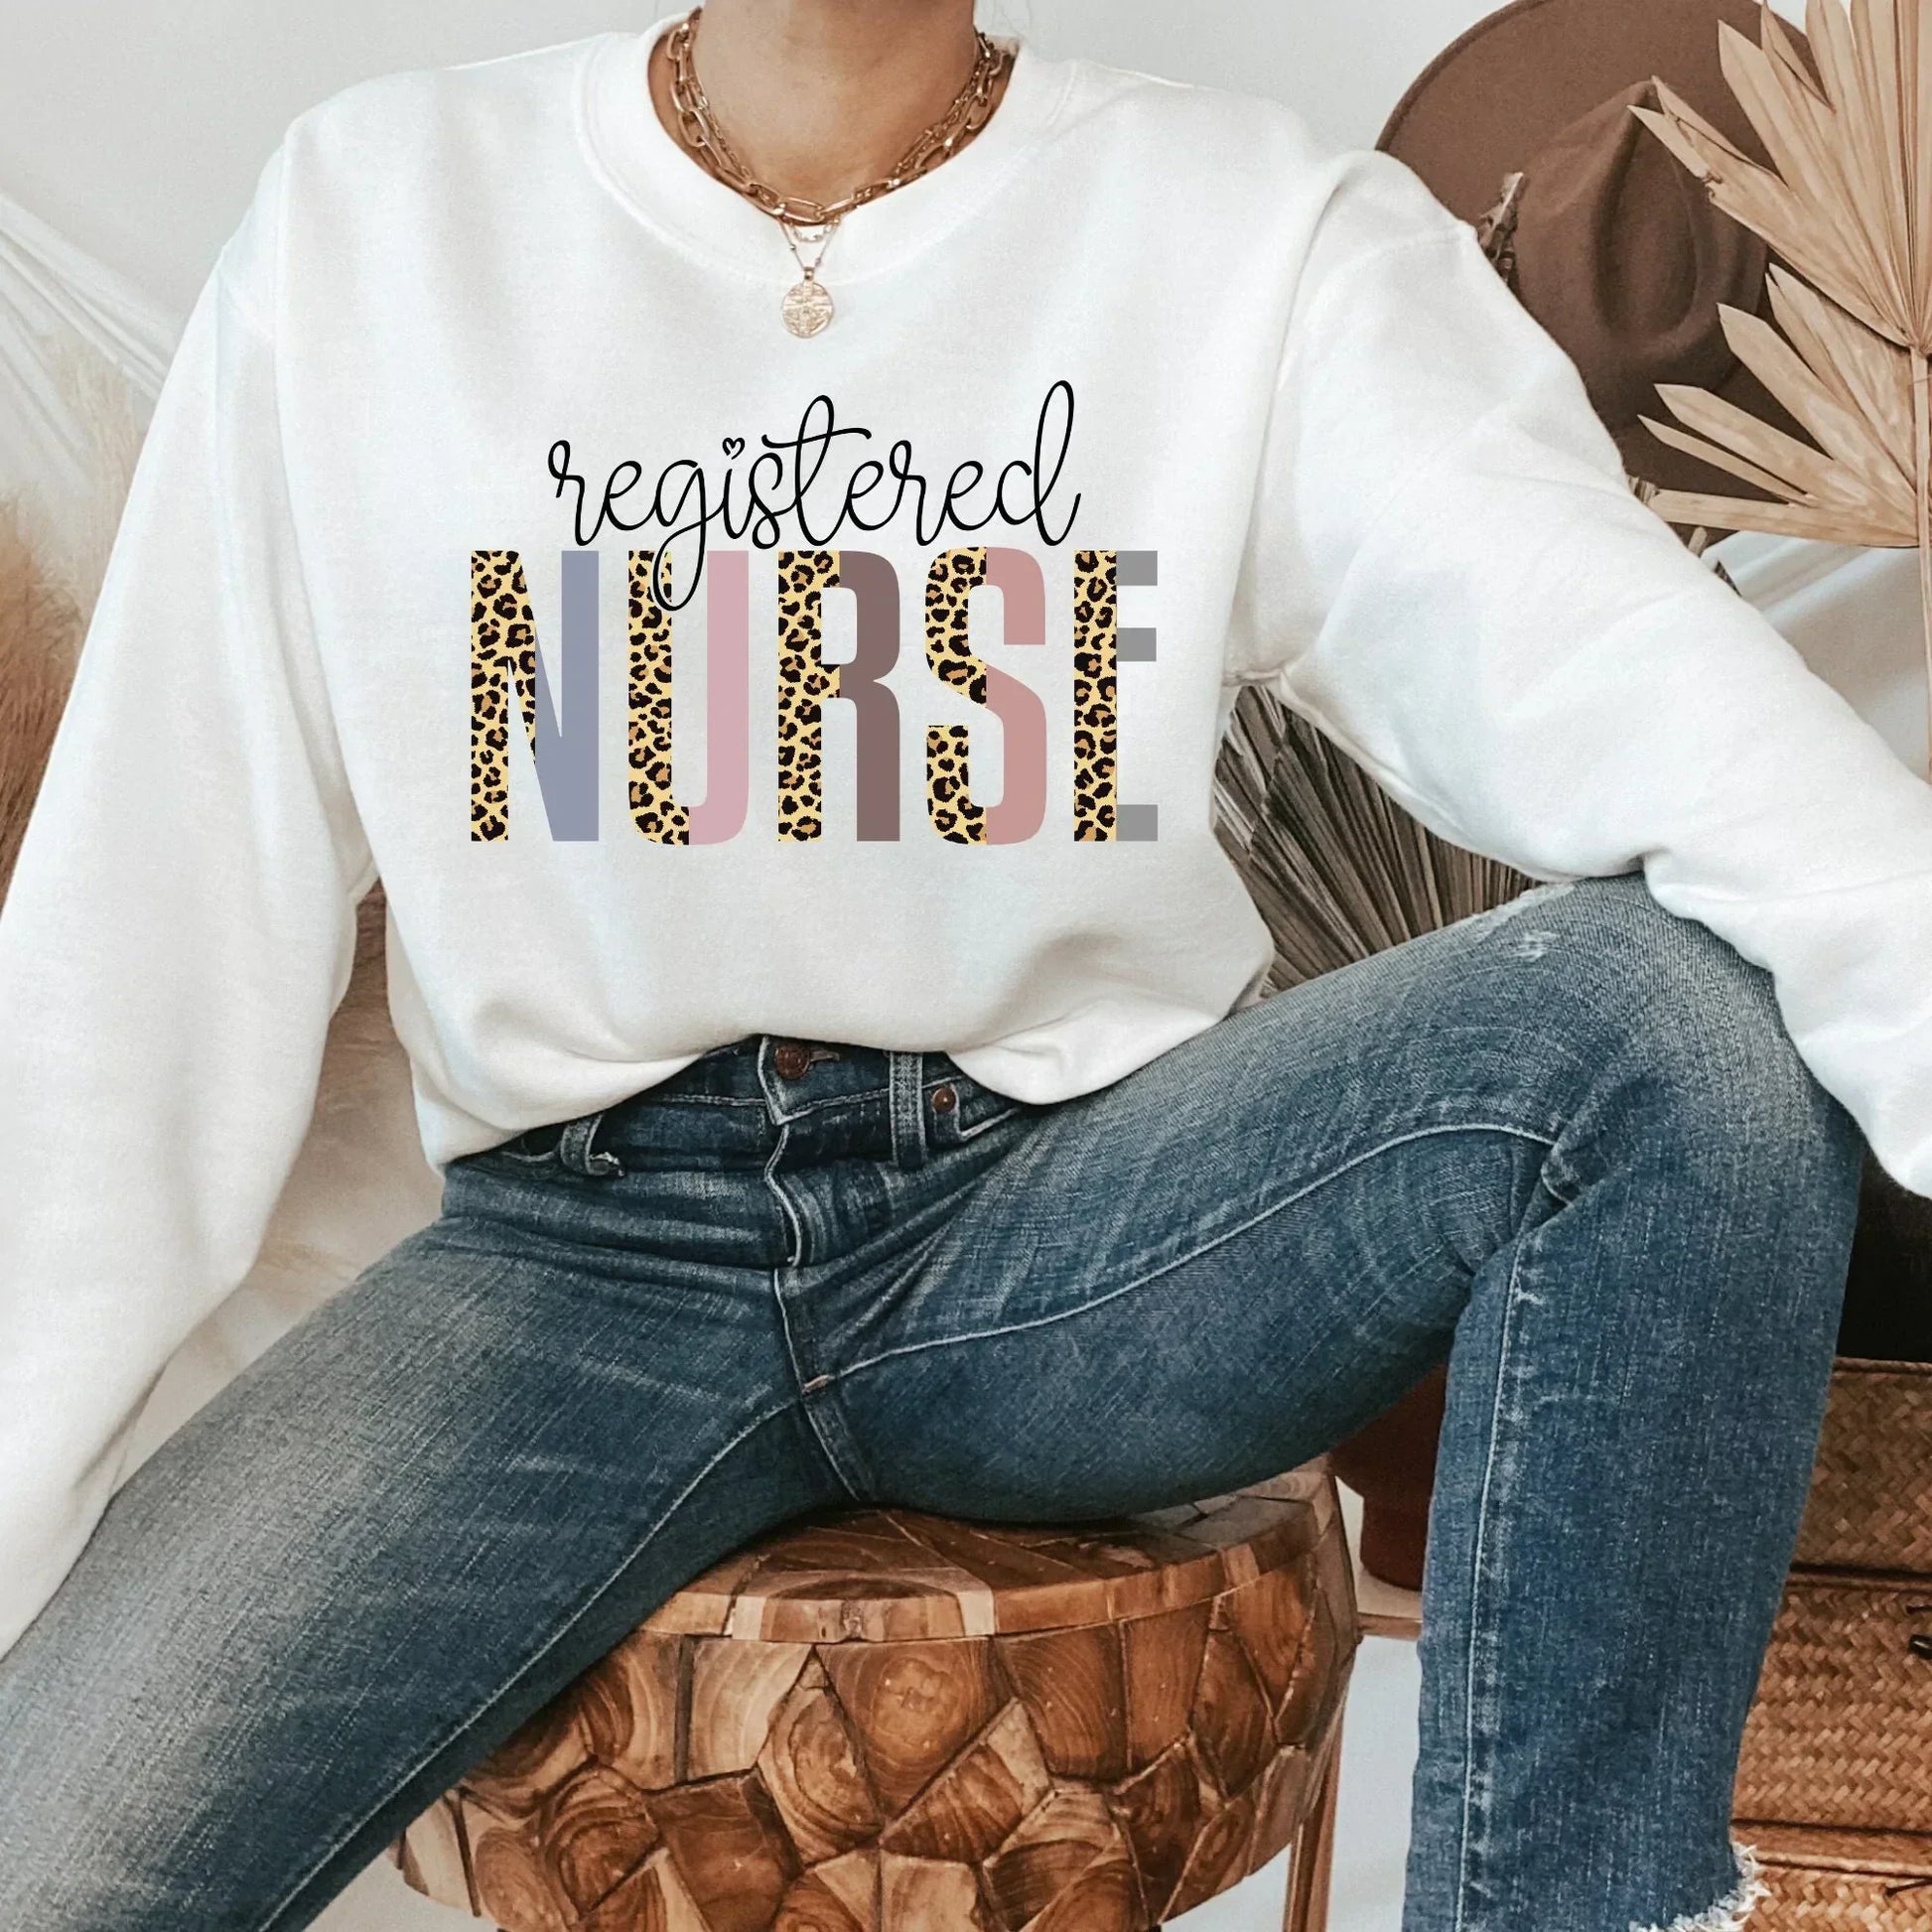 Registered Nurse Shirt, Nurse Hoodie, The future is female, Nurse practitioner, Nursing Student, Nurse Sweatshirt, Nurse Appreciation Gift HMDesignStudioUS